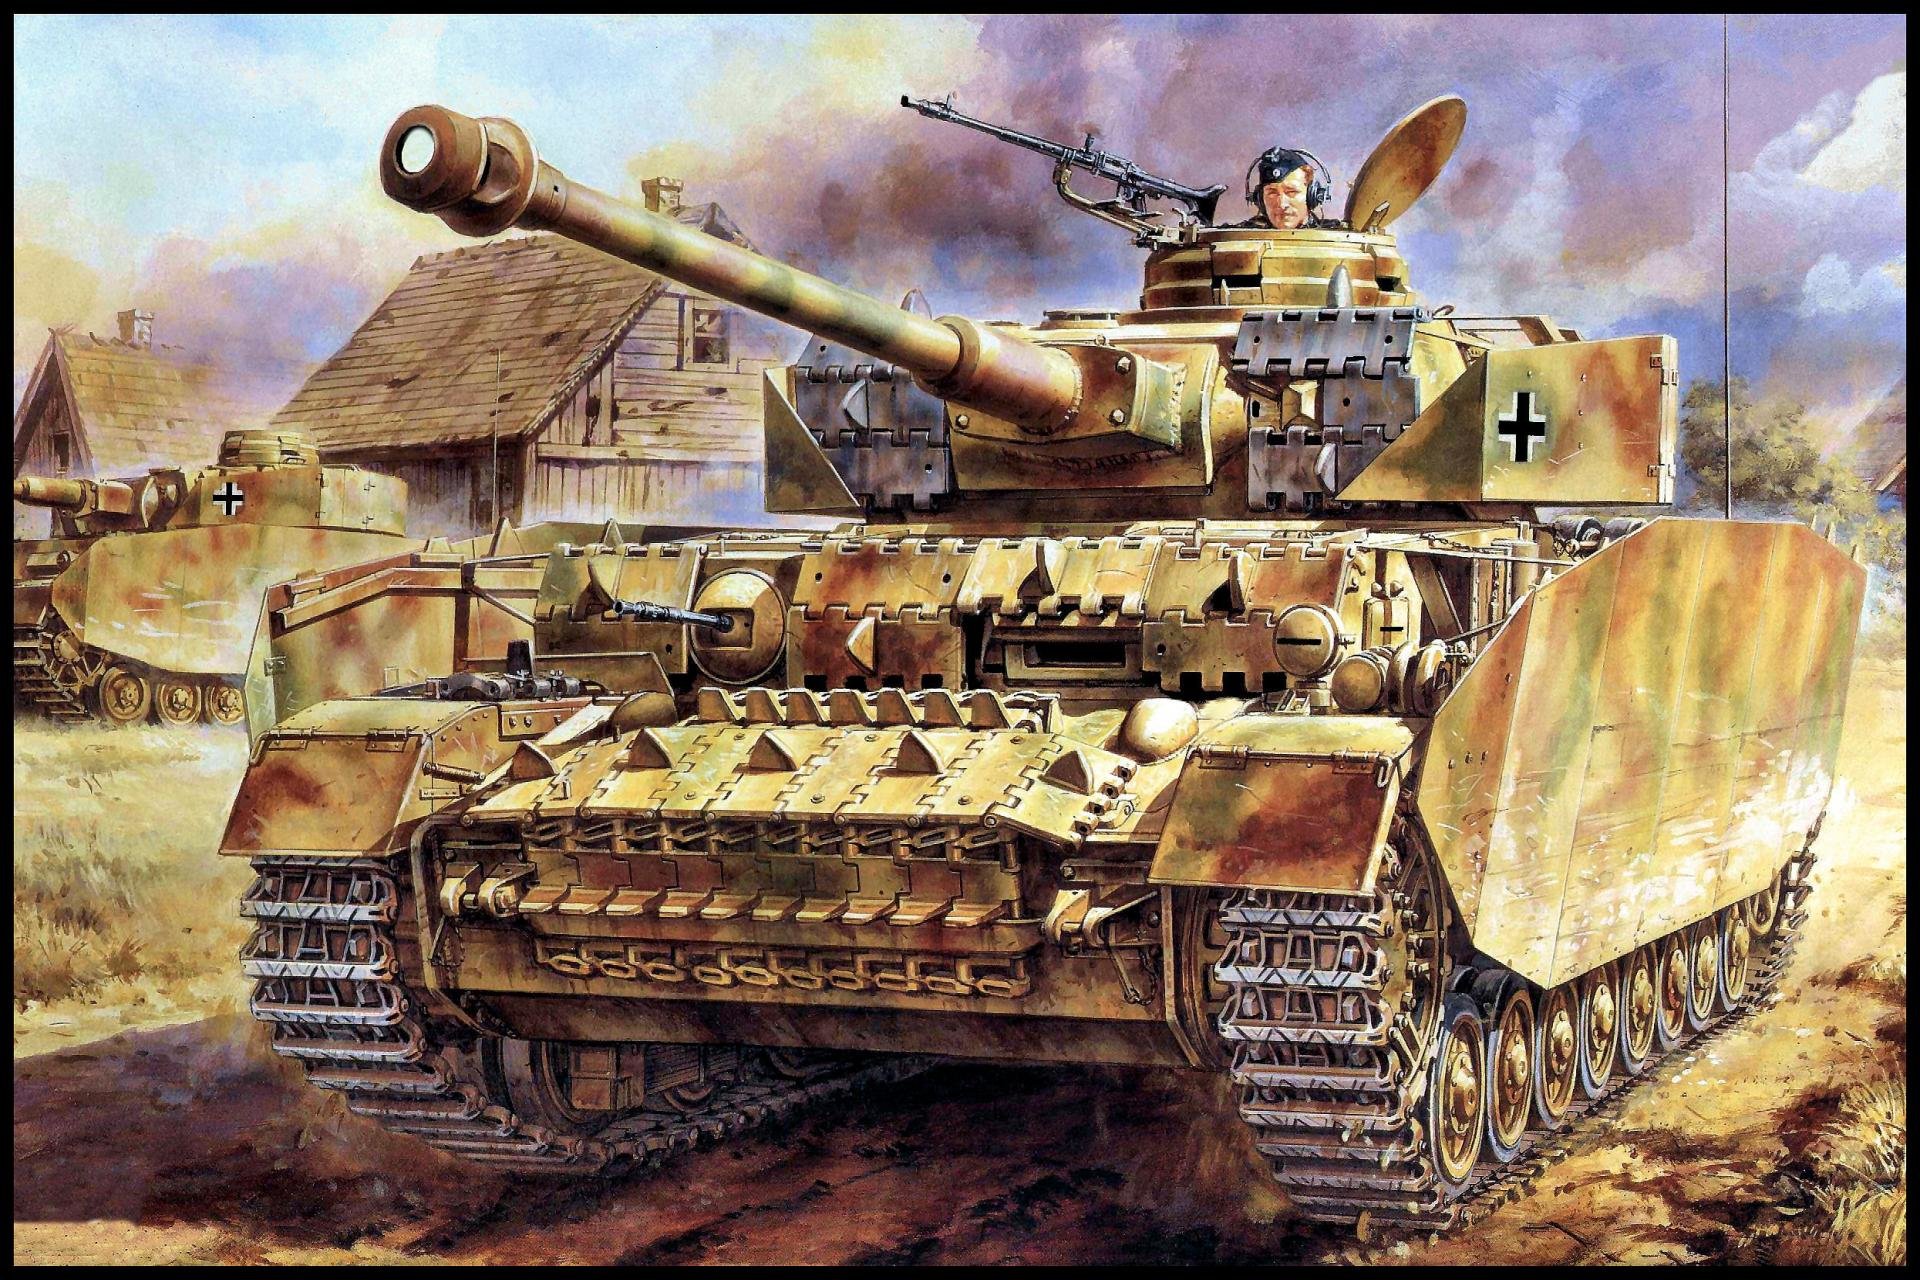 Panzer IV wallpaper HD for desktop background